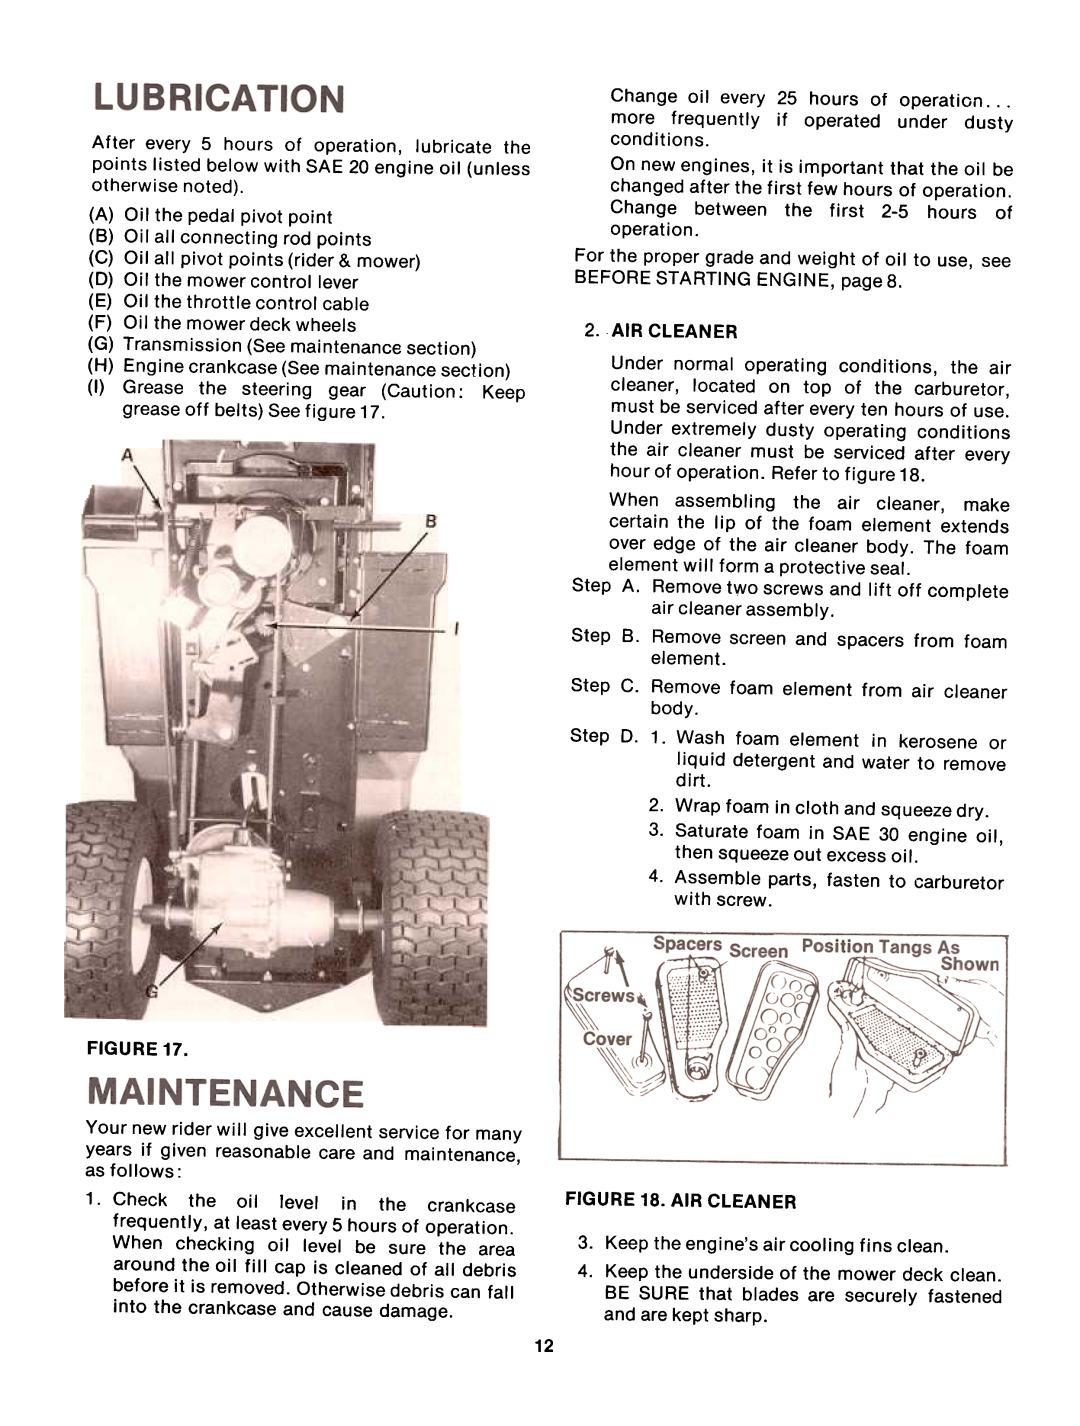 Bolens 13885-8 Air Cleaner, Step D. 1. Wash foam element in kerosene or, dirt, Keep the enginesair cooling fins clean.4 